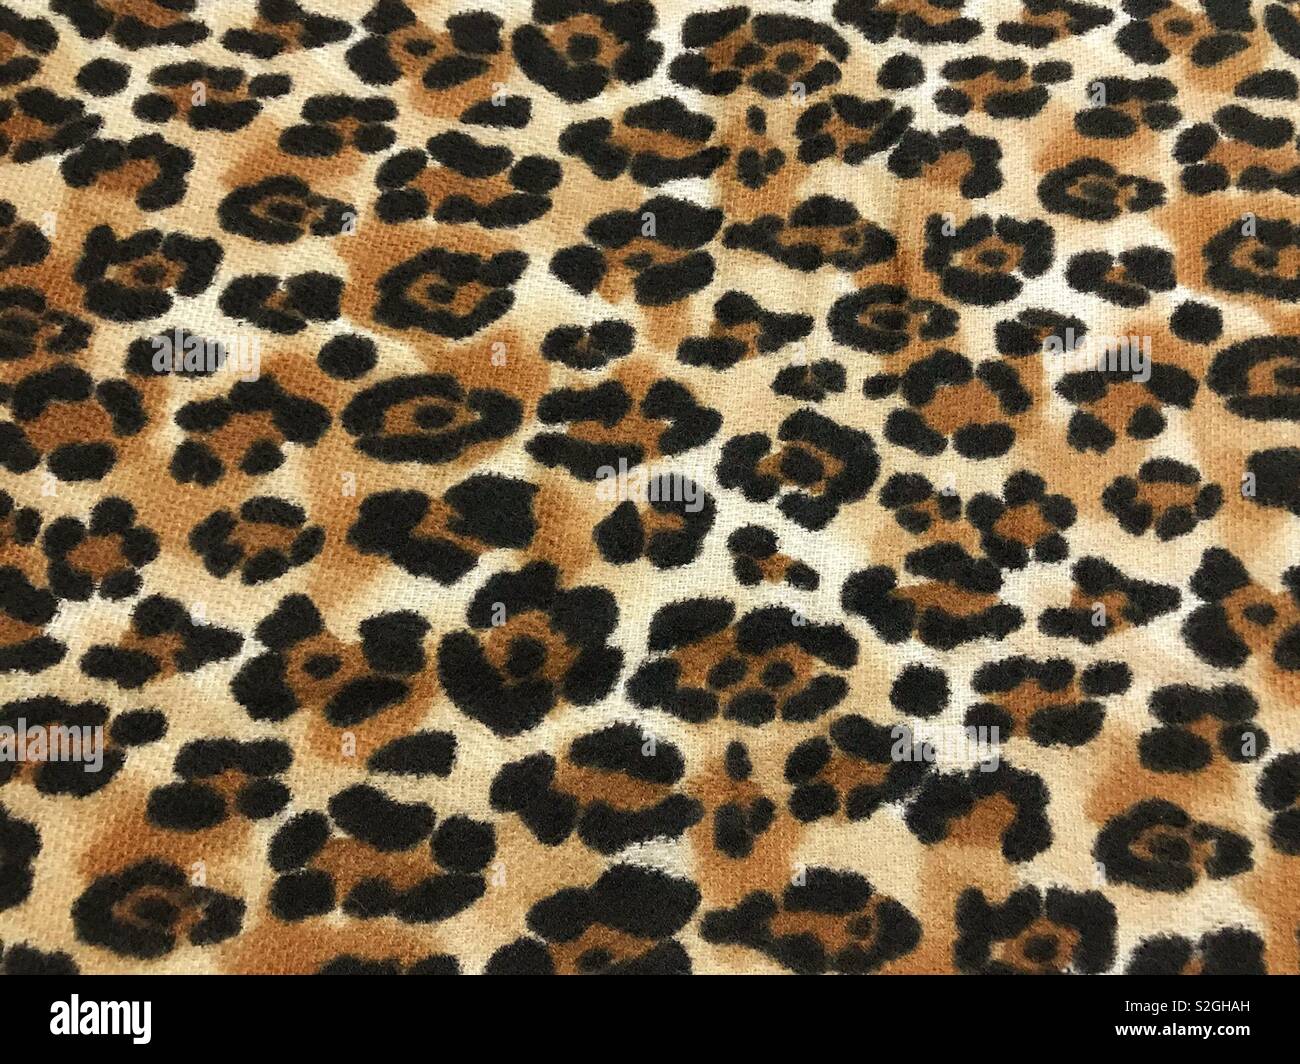 Leopard Print fabric Stockfoto